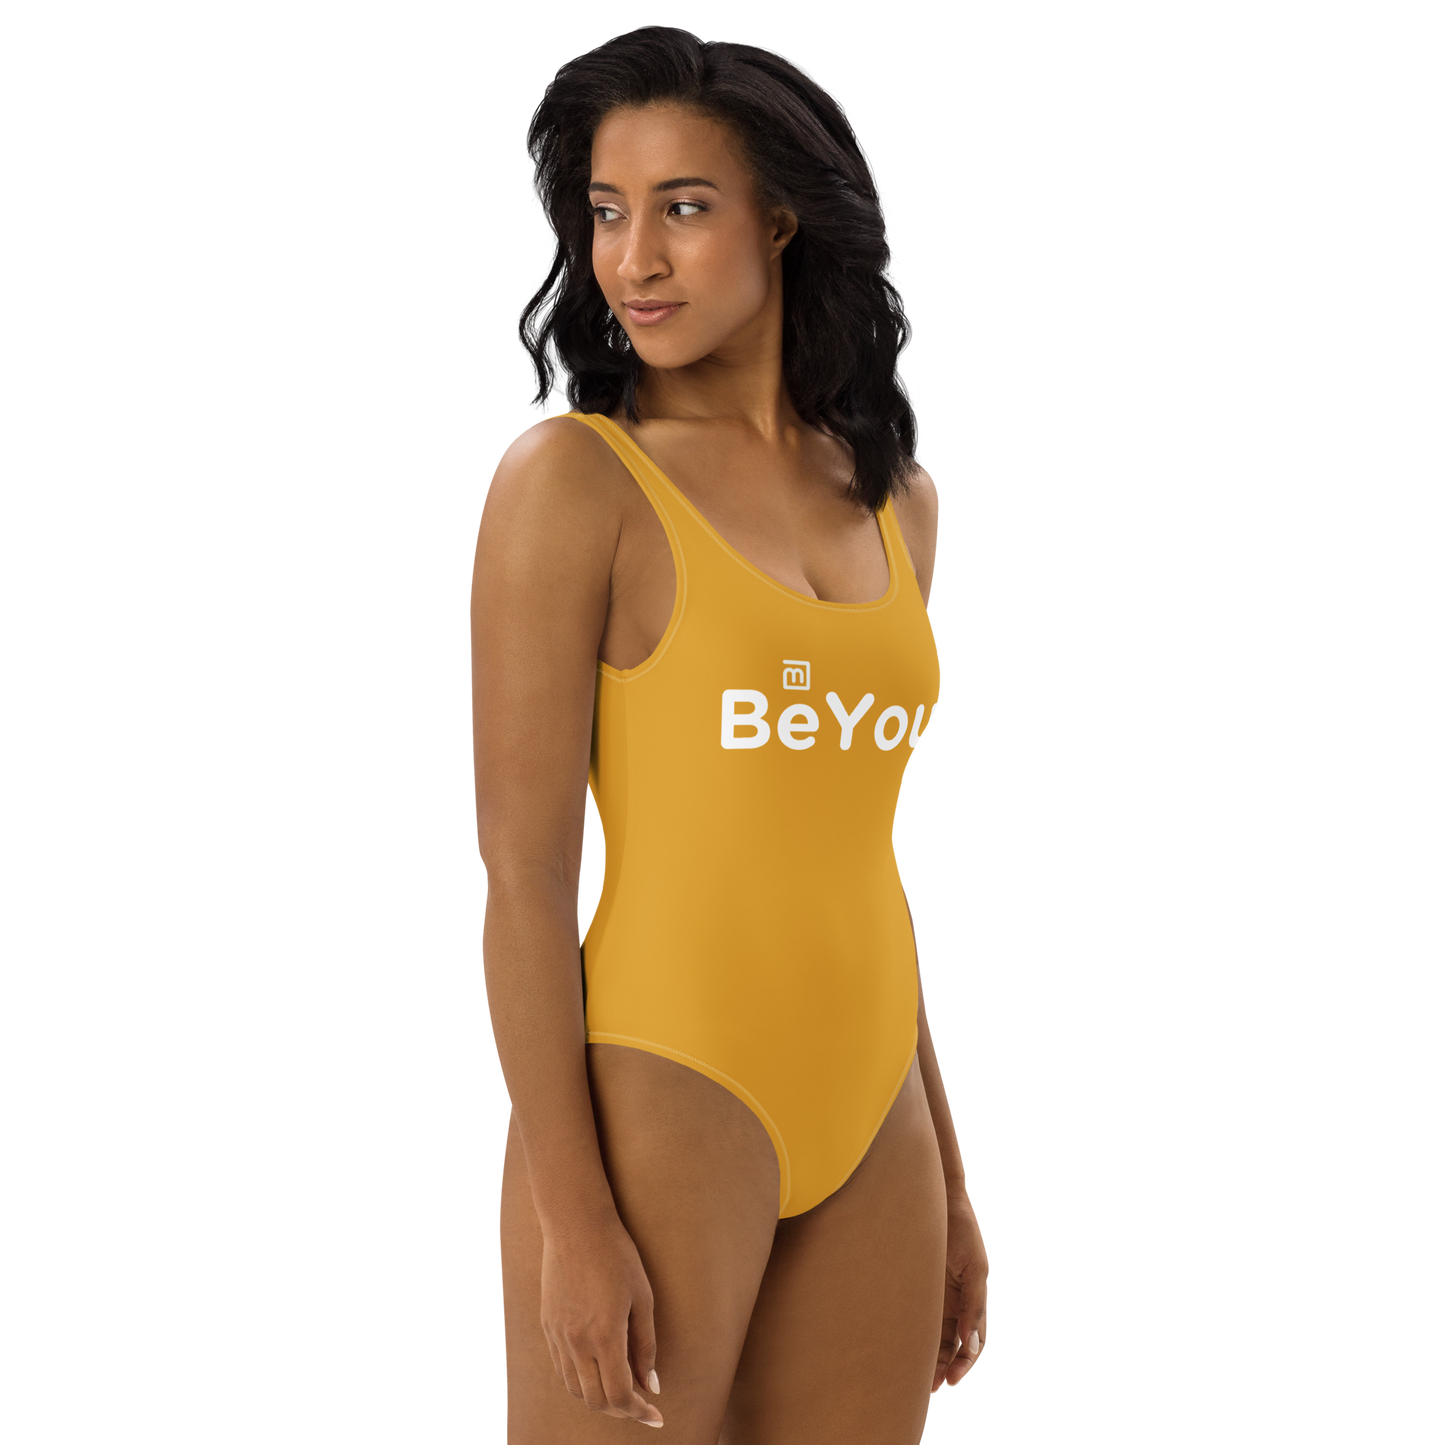 Buttercup Gold One-Piece Body Shaper BeYou Swimsuit